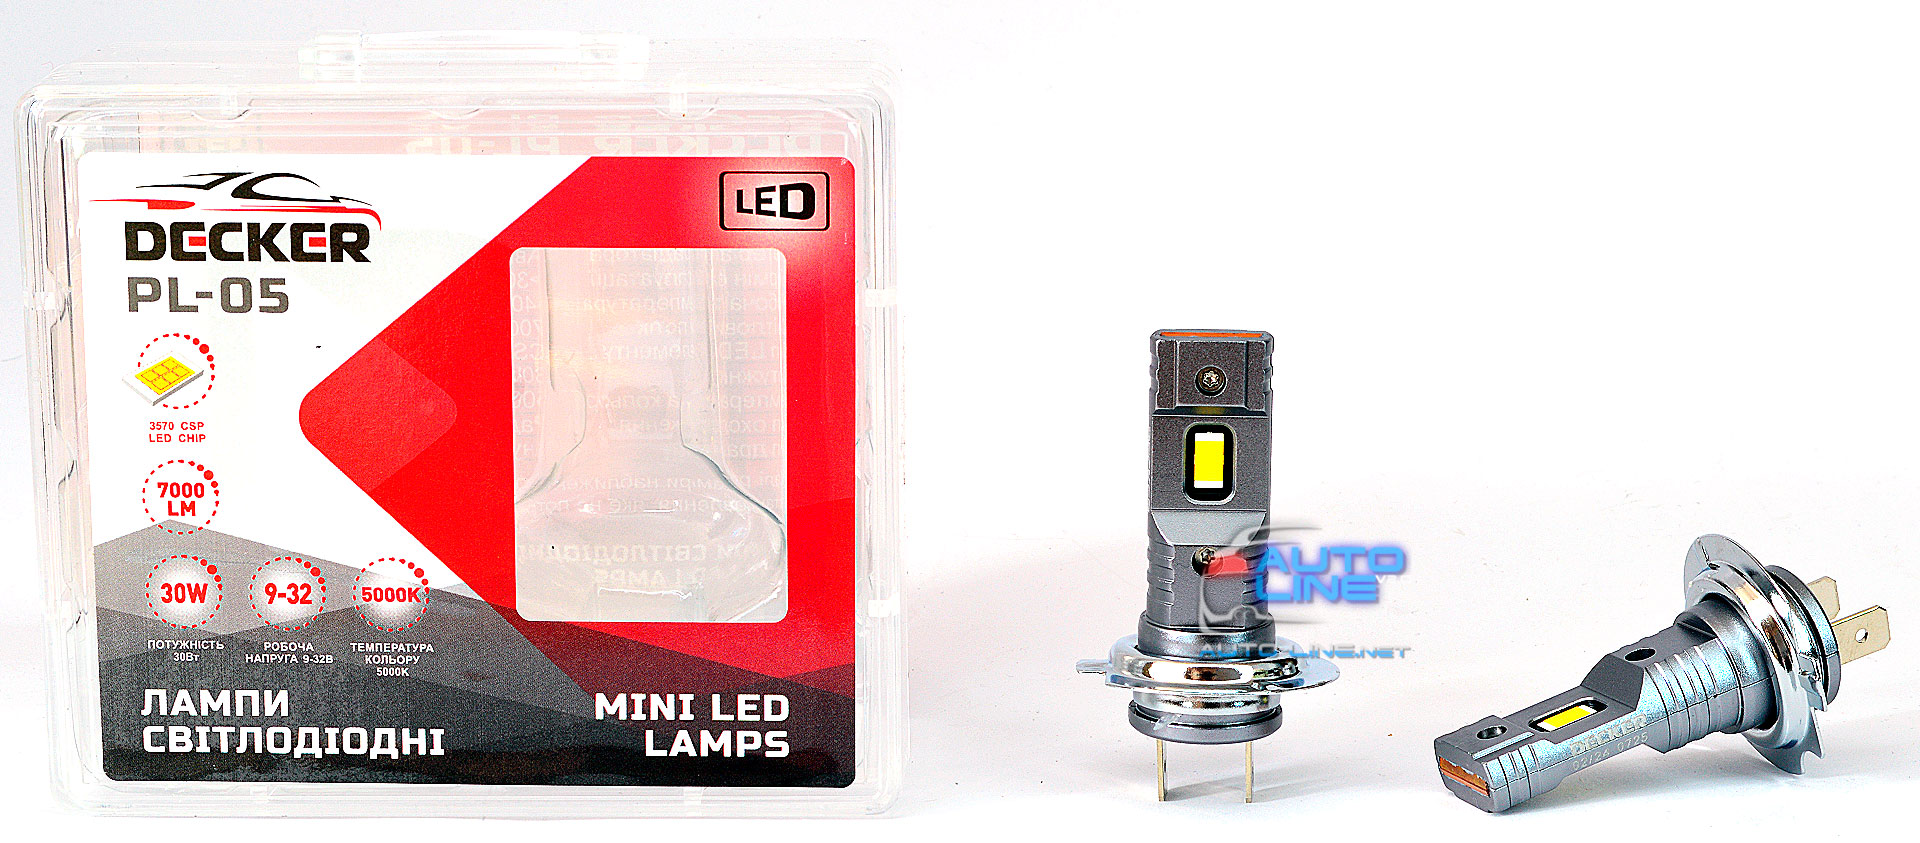 Decker LED PL-05 5K H7  — мини LED-лампа H7 под галогенку, без вентилятора, 5000K